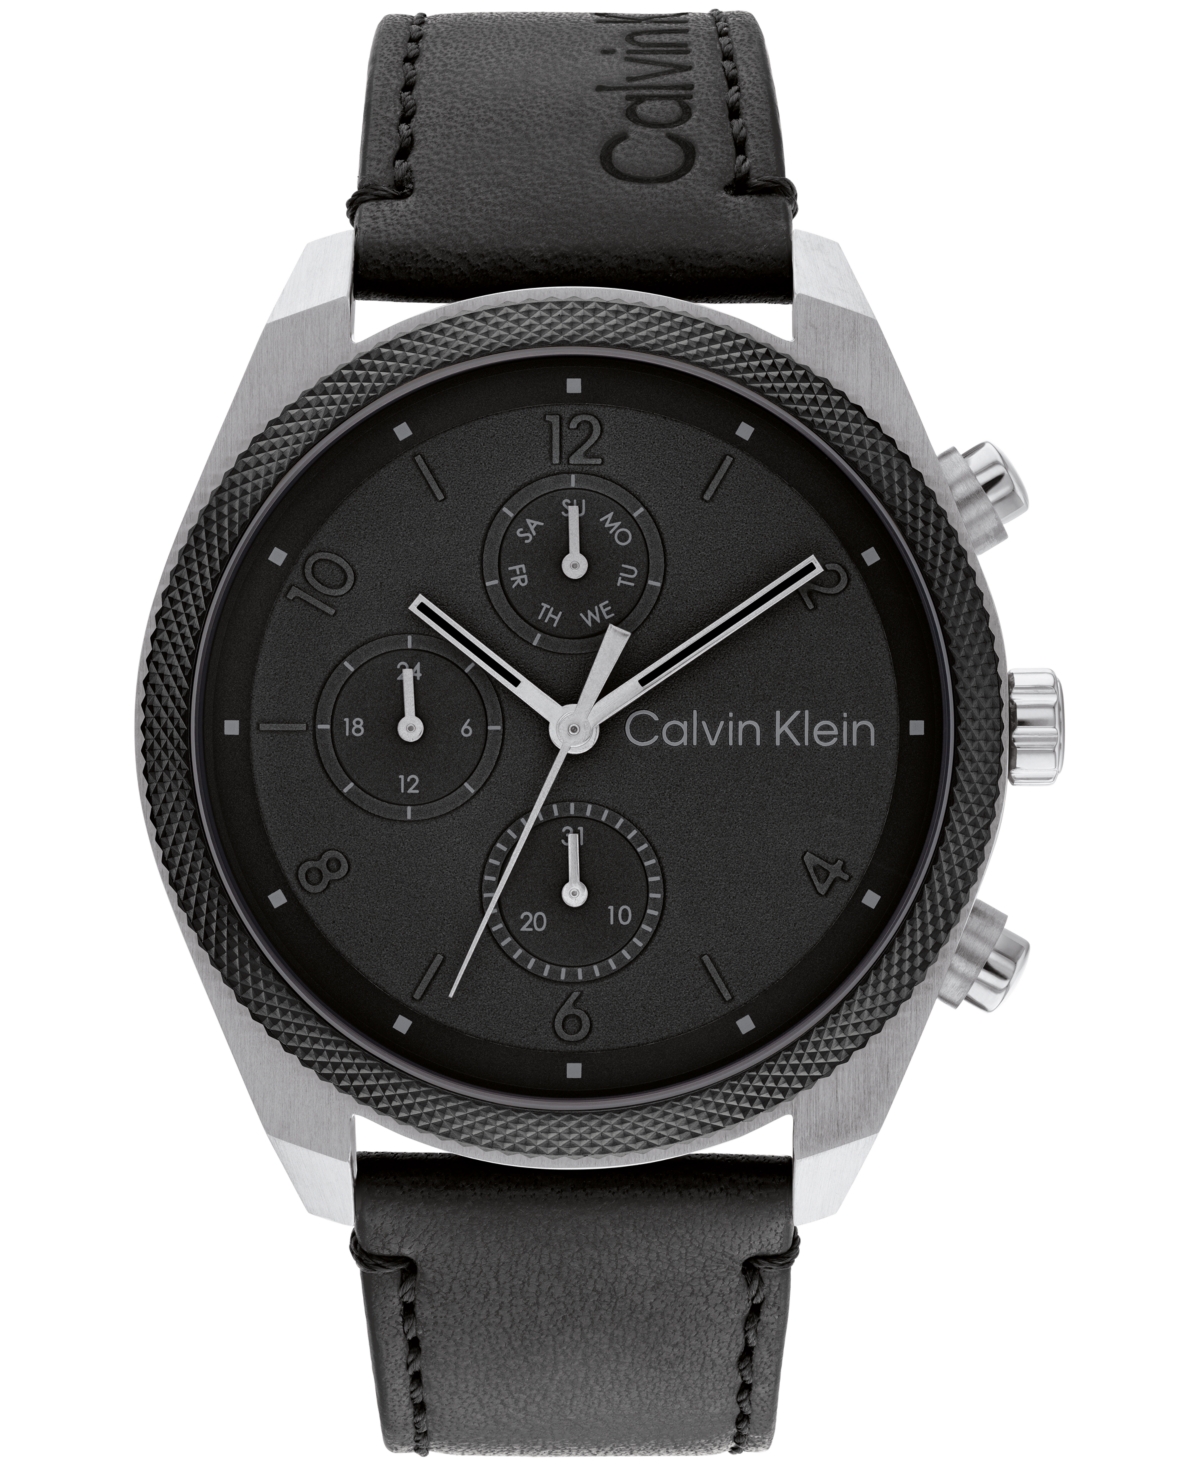 Men's Multifunction Black Leather Strap Watch 44mm - Black